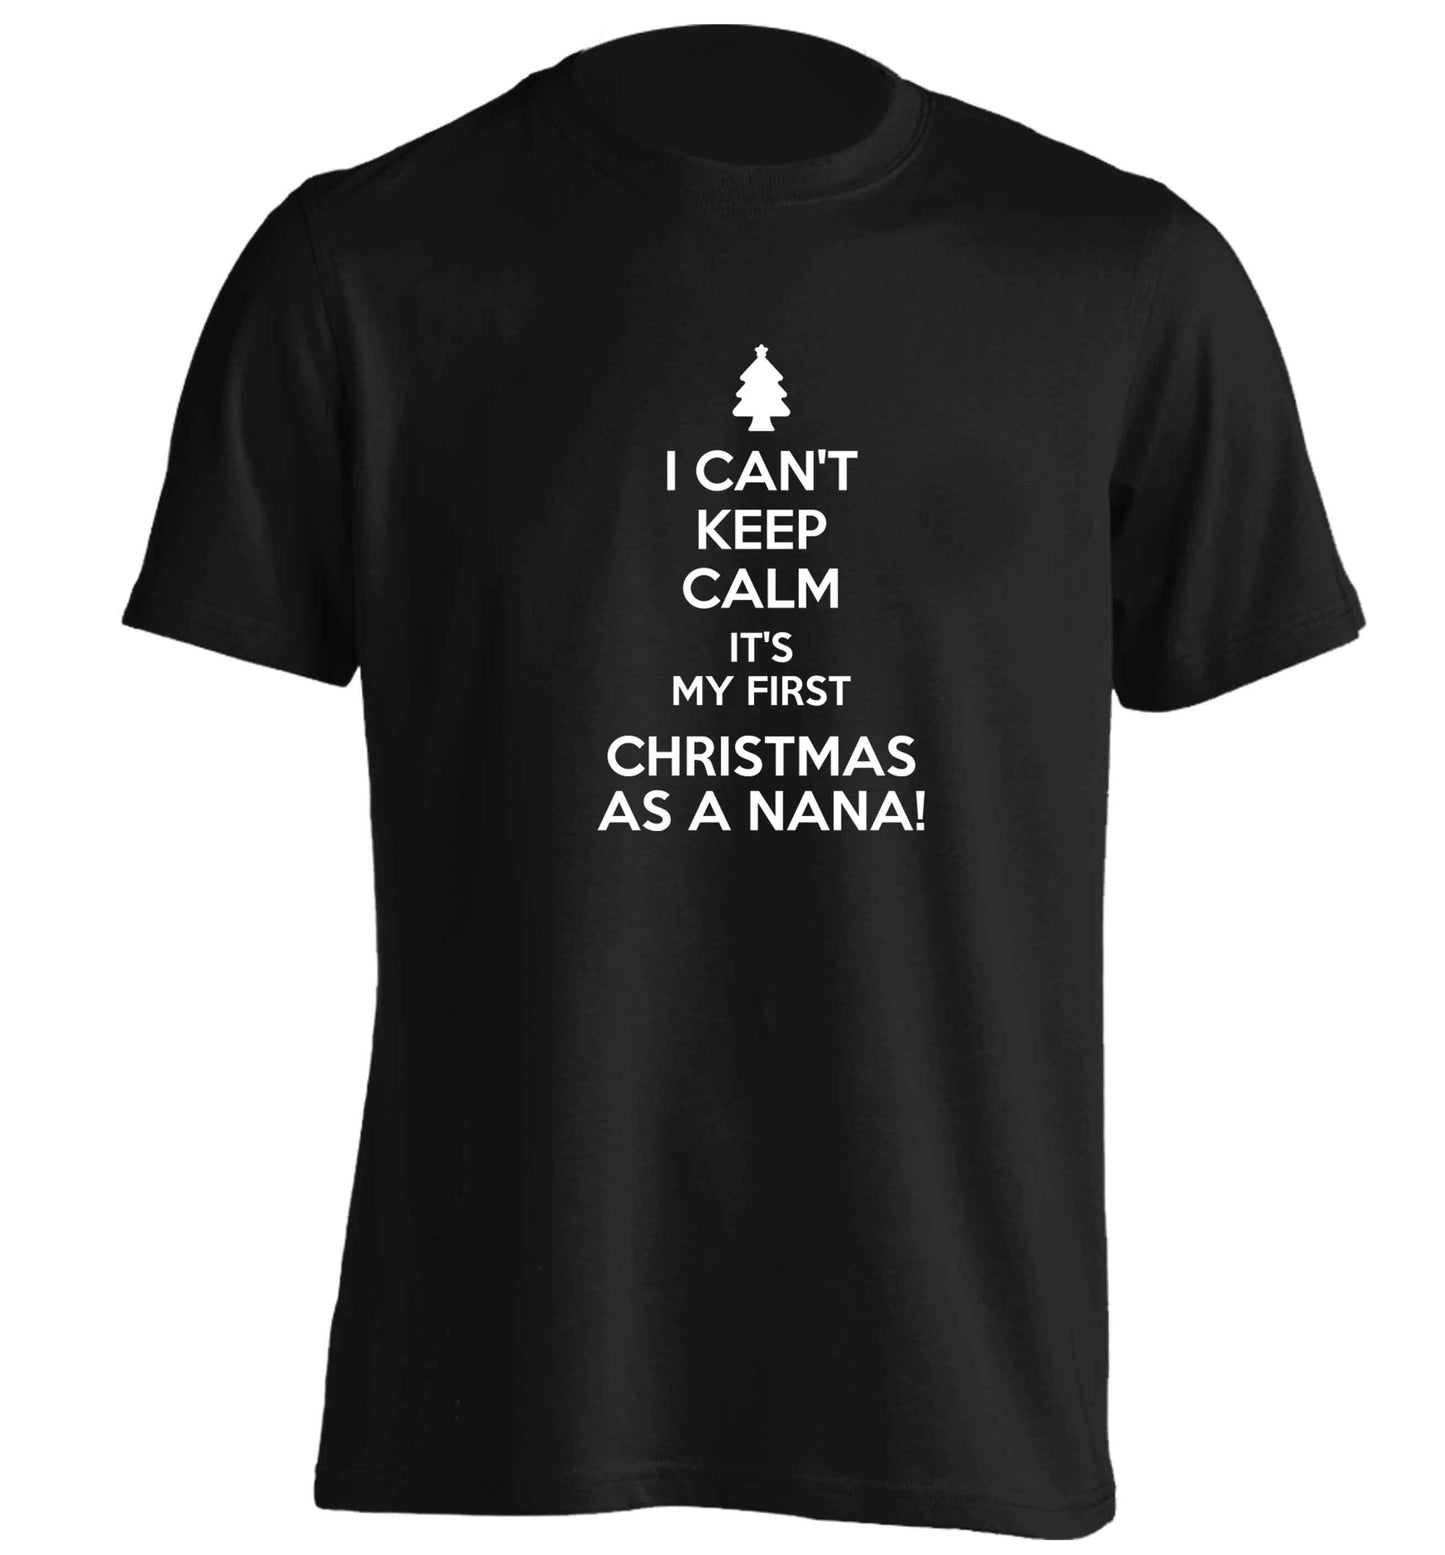 I can't keep calm it's my first Christmas as a nana! adults unisex black Tshirt 2XL